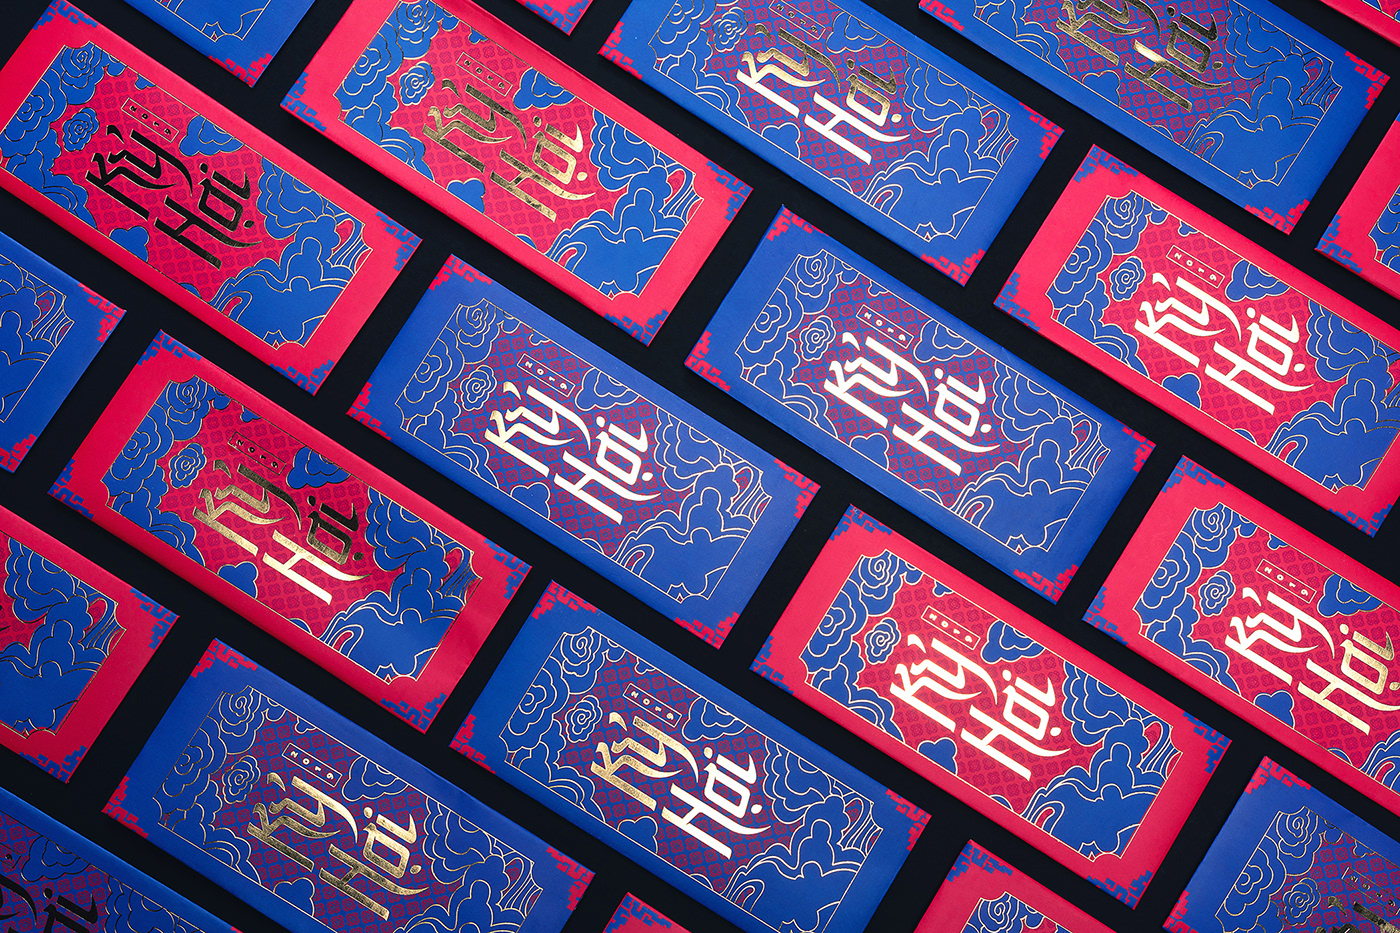 Brandex tet Packaging kỷ hợi playing card vietnam tradition lunar new year hanoi